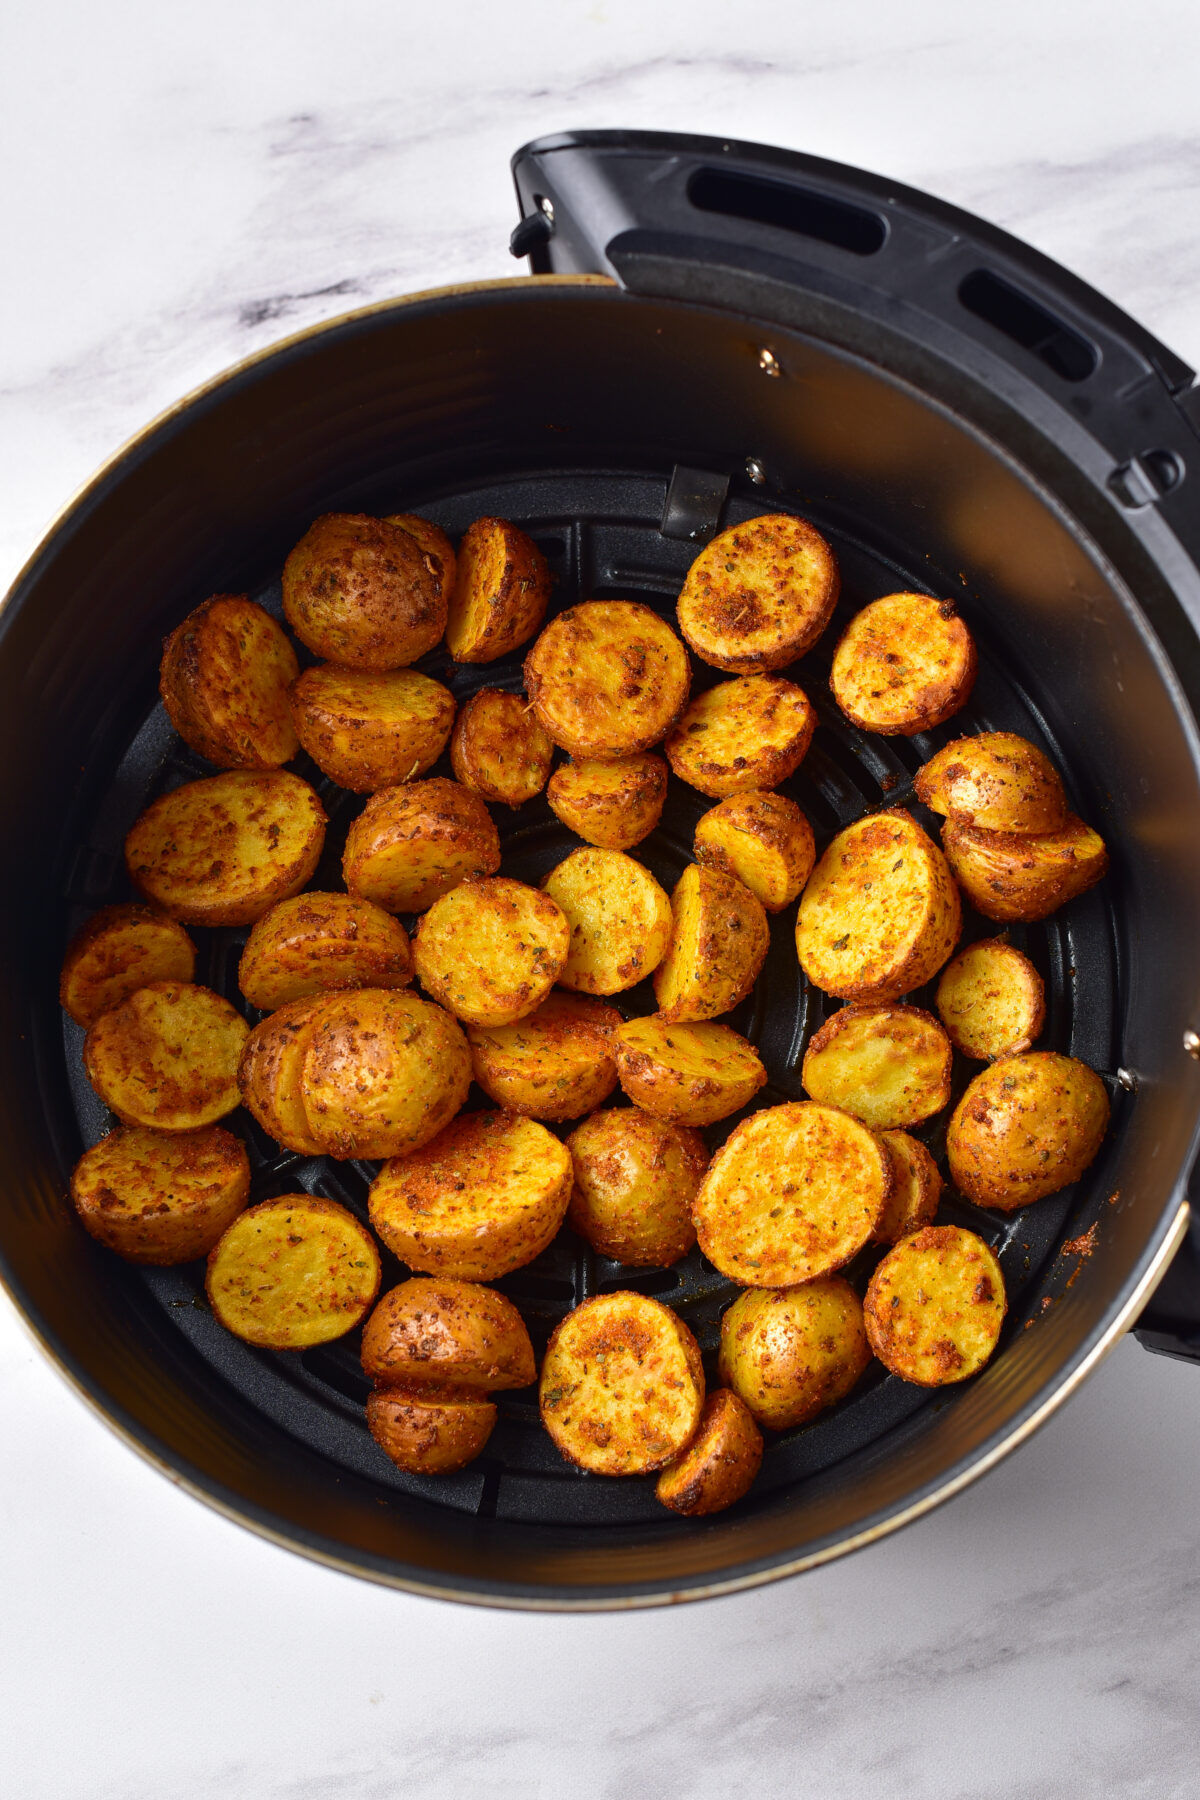 Baby potatoes half way through roasting.